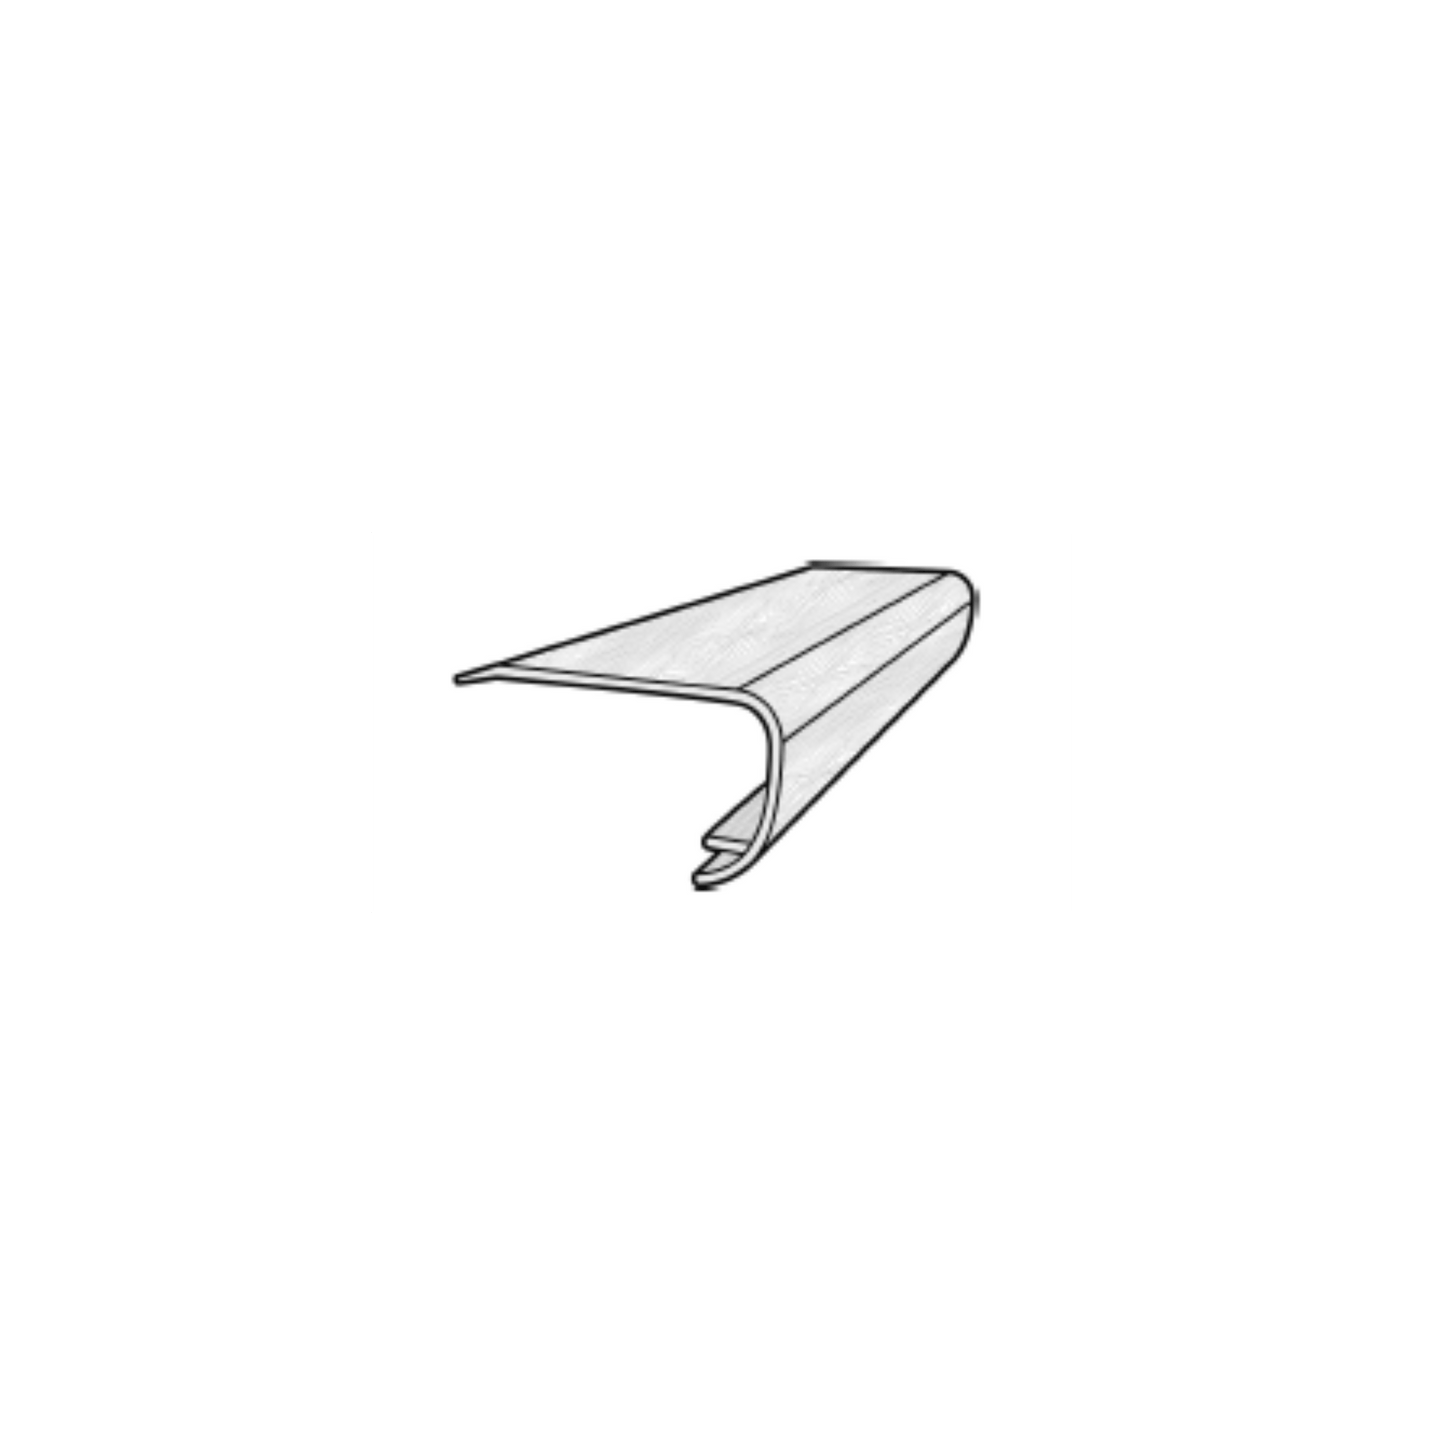 Accessory MSI - Cyrus - Billingham - Overlap Stair Nose MSI